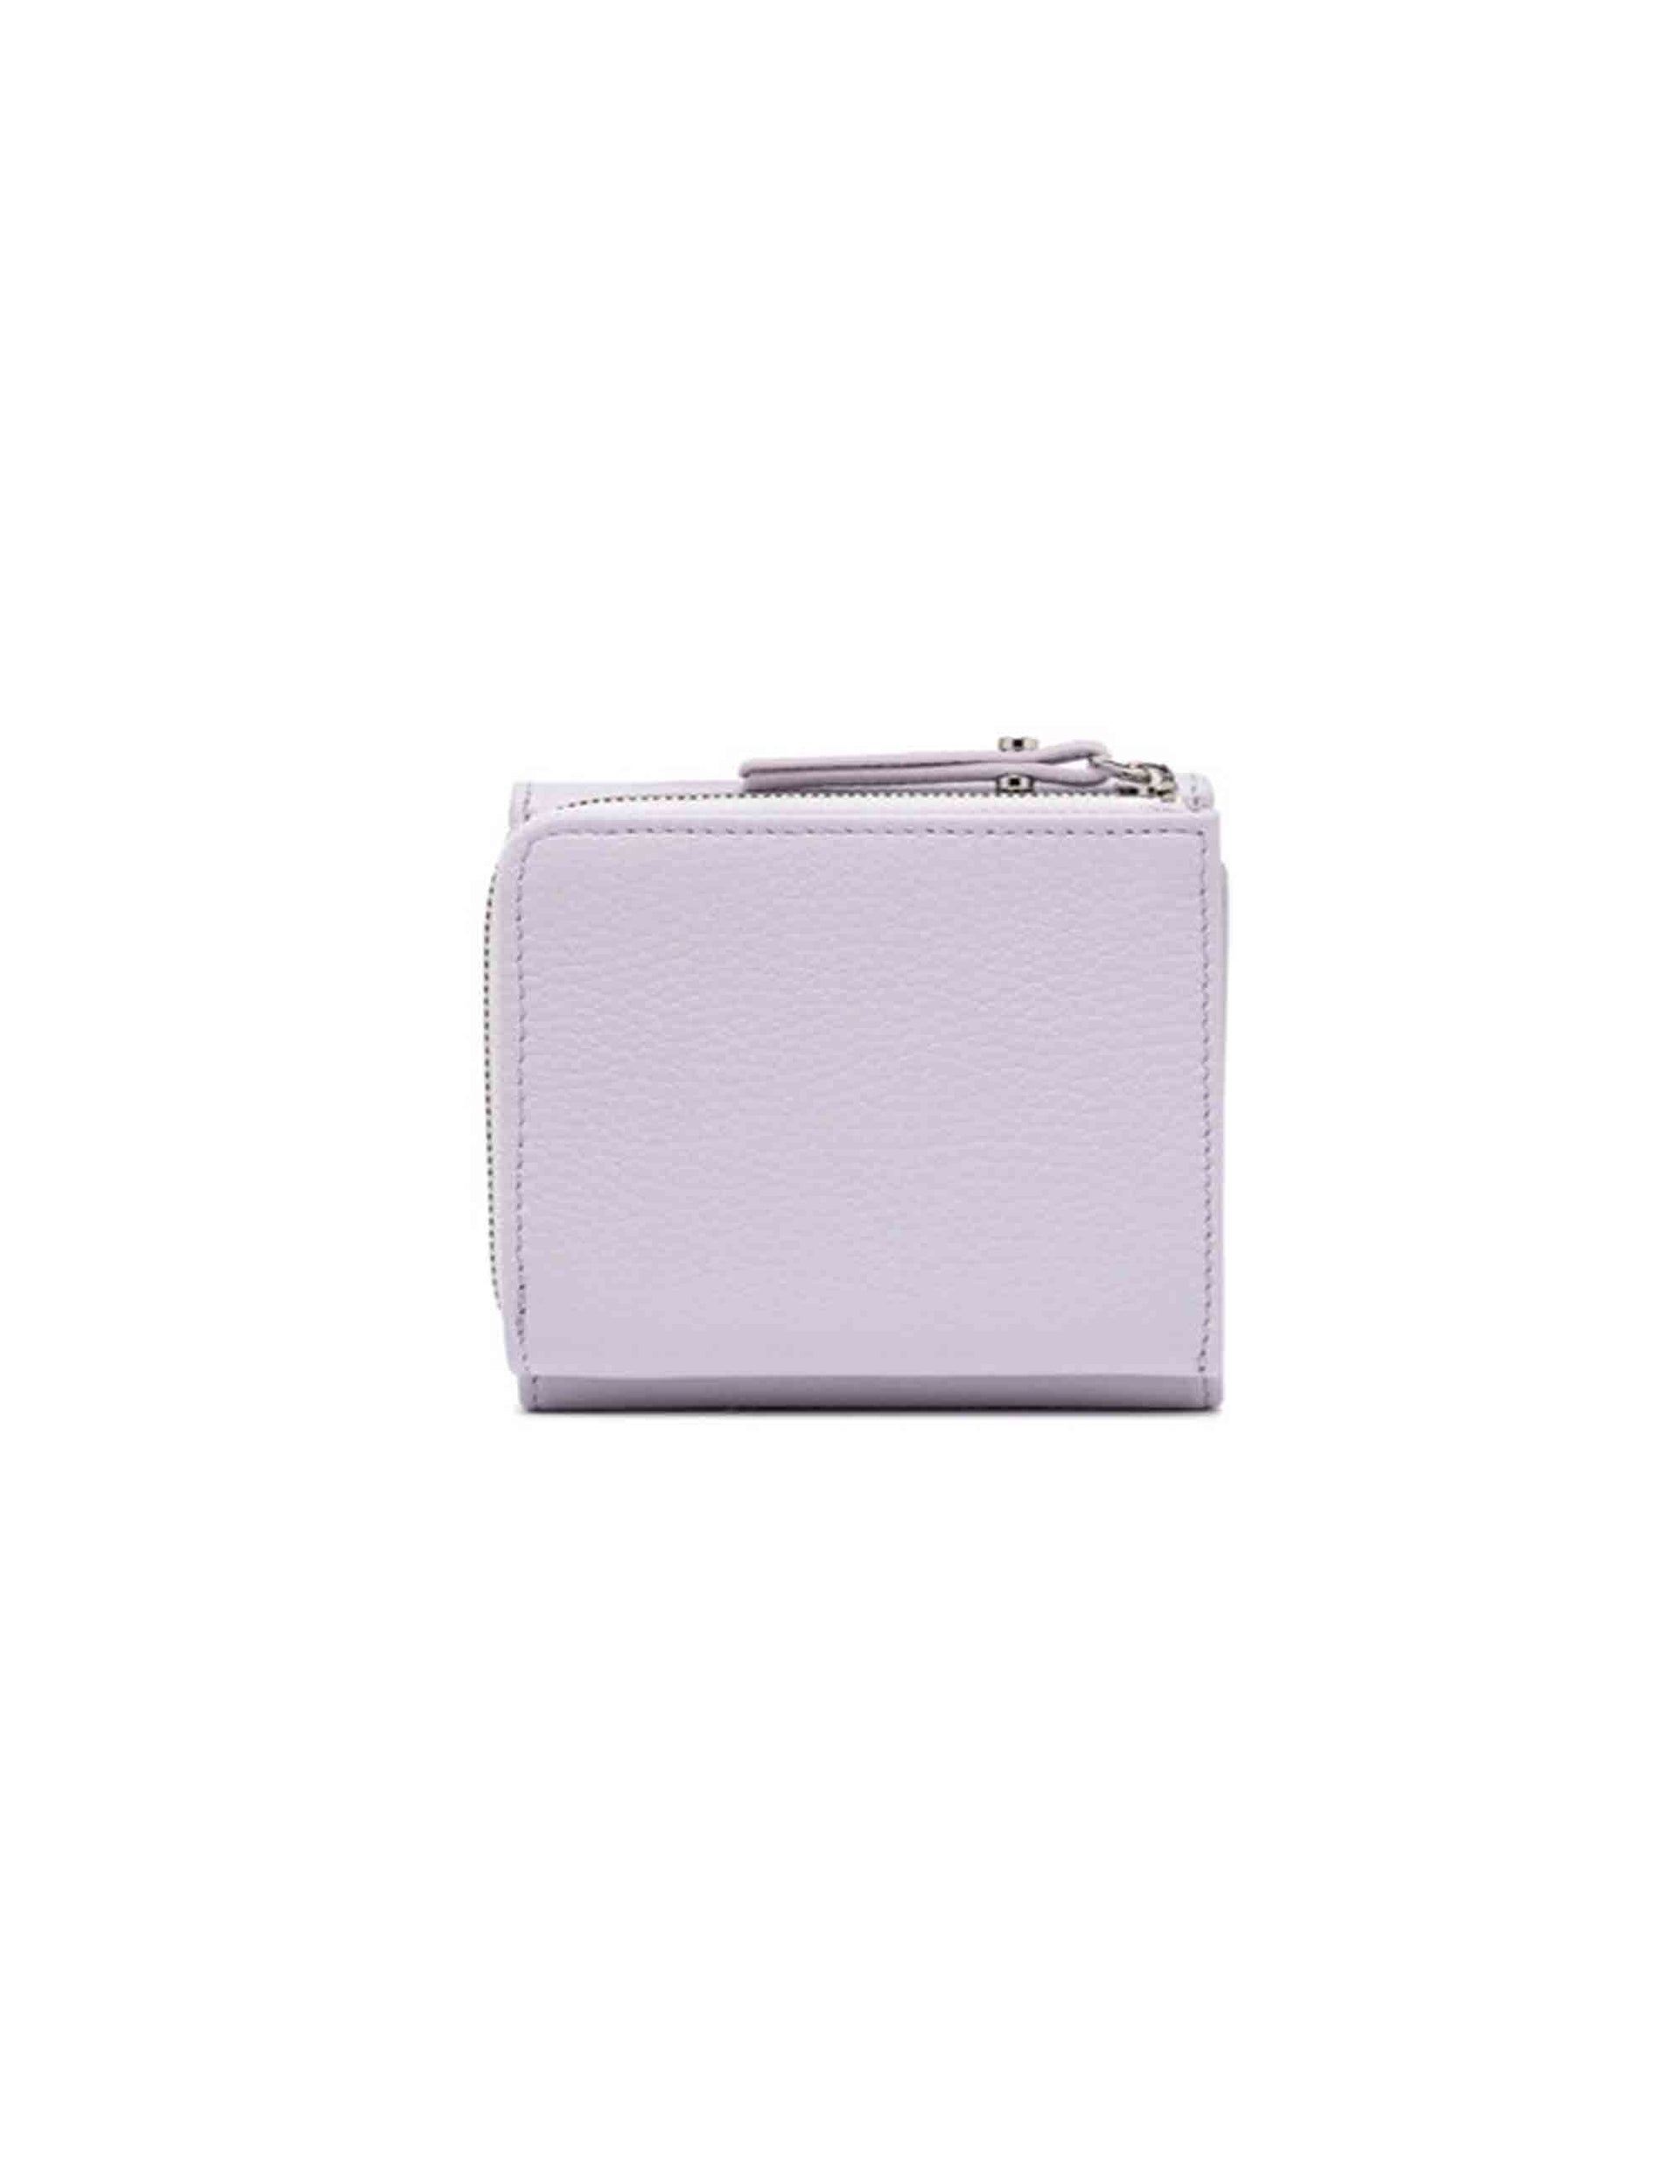 Women's cream leather wallet